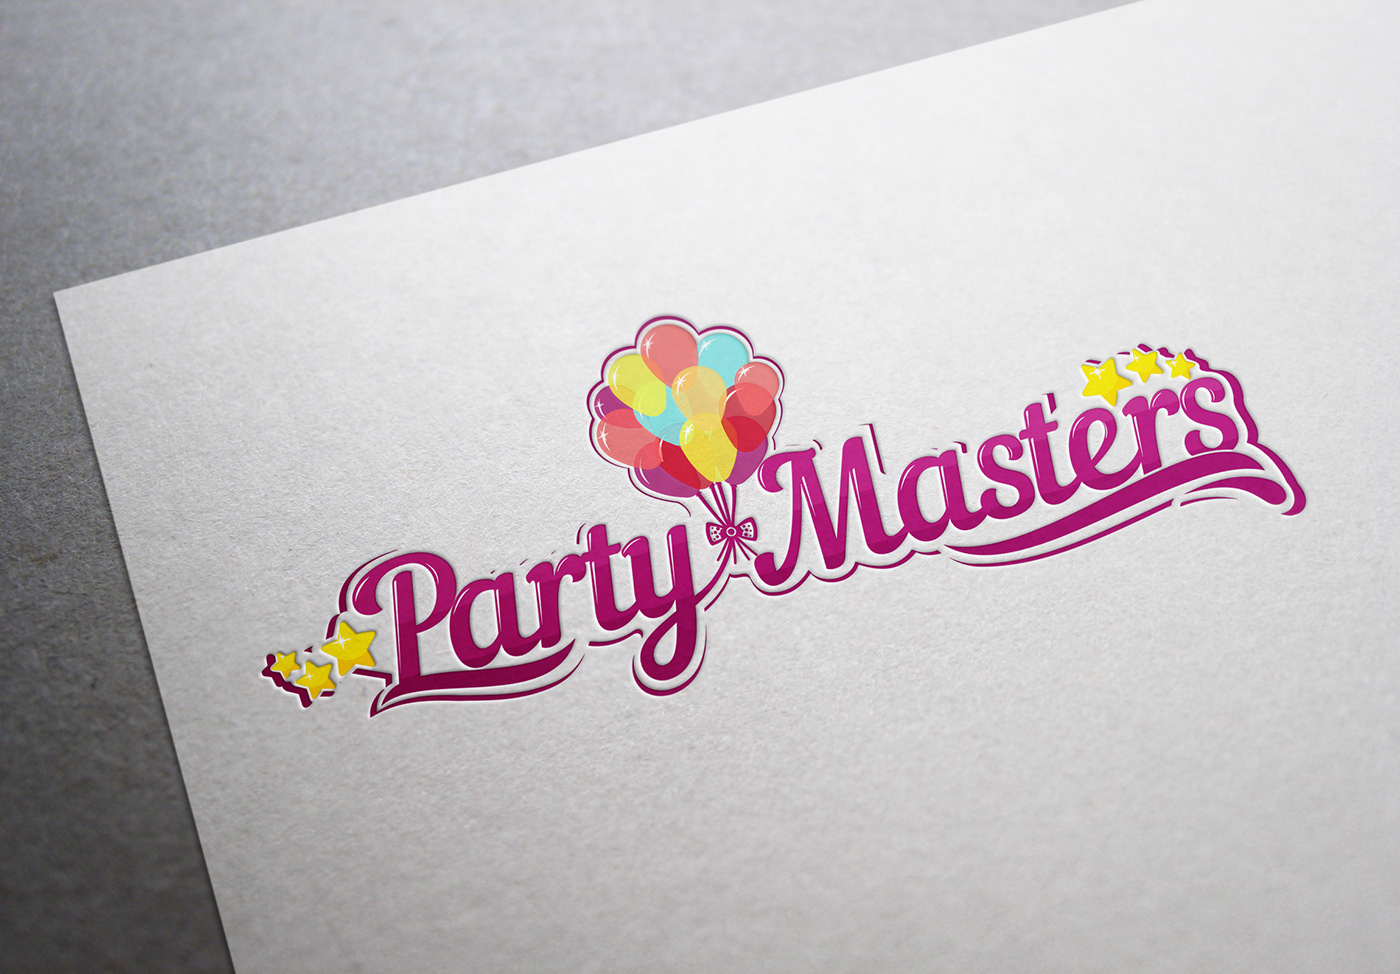 Www masters com. Karina Party логотип.